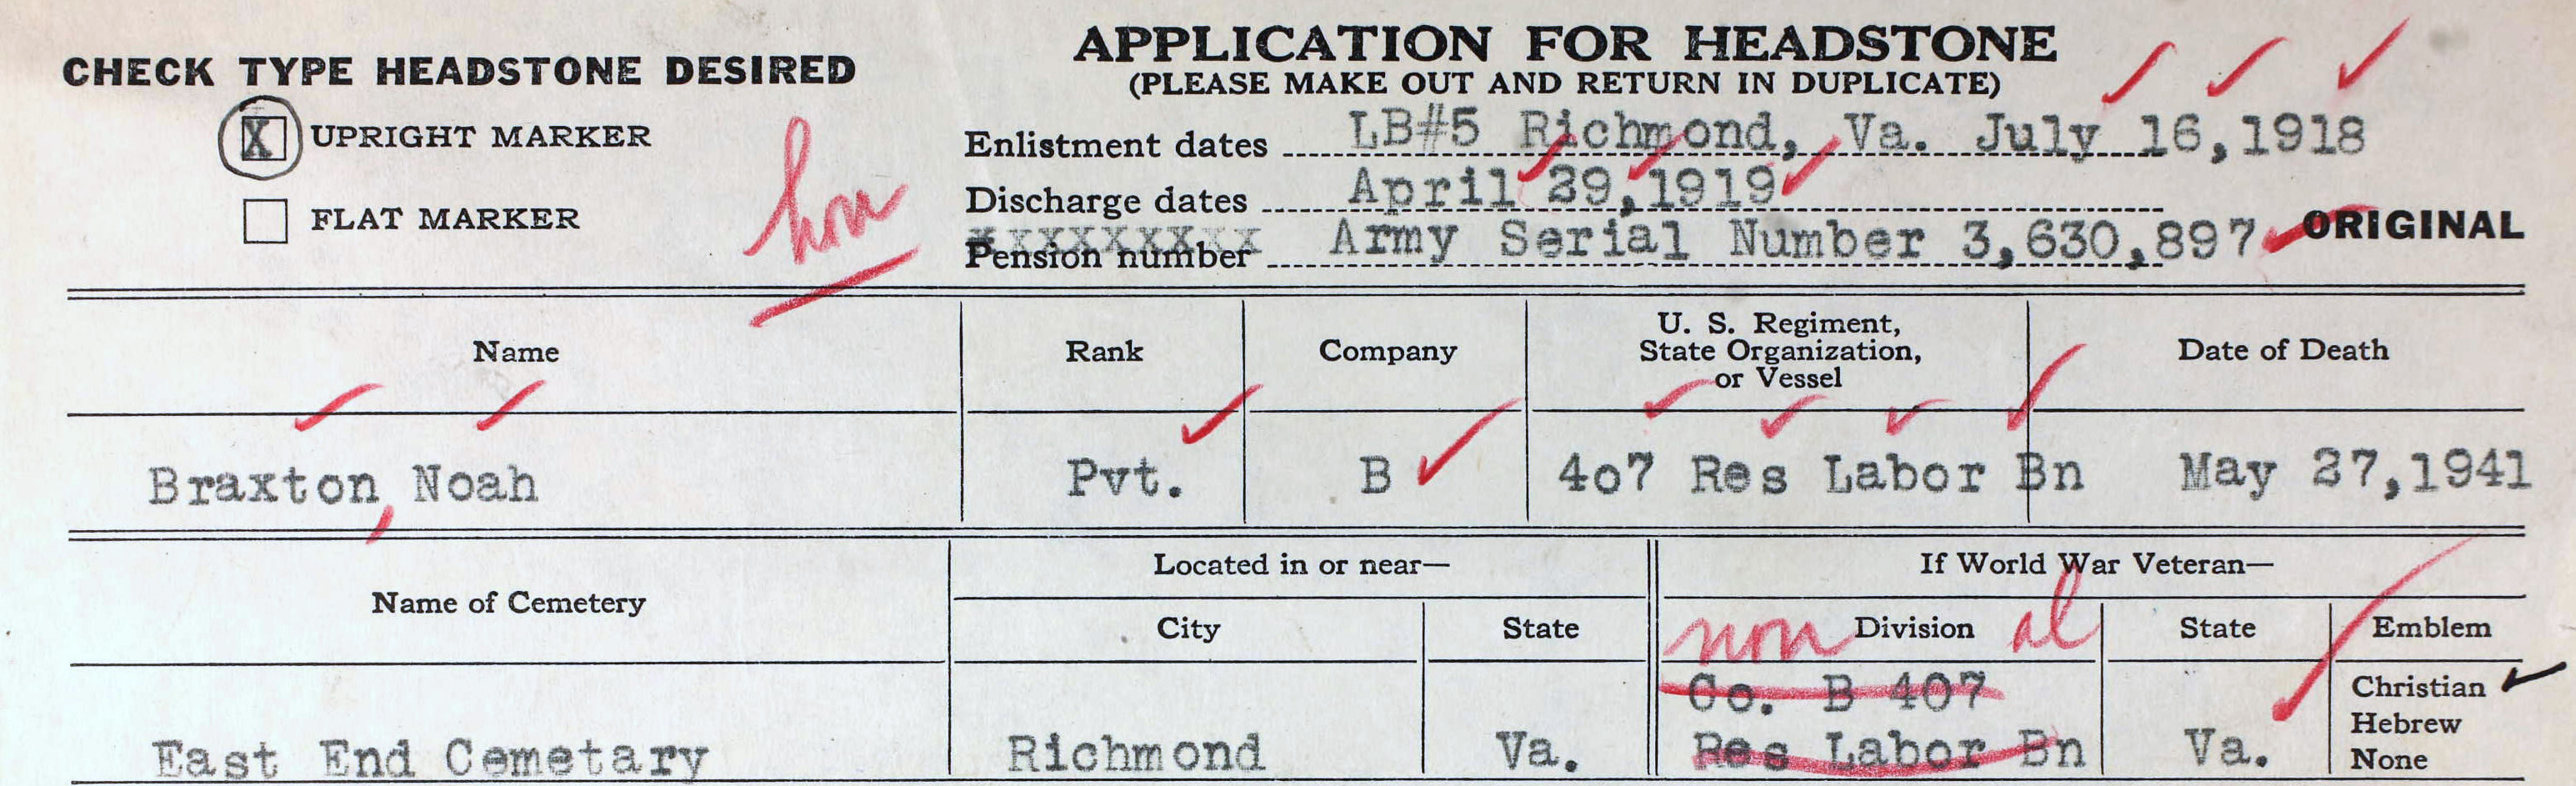 Application for veteran headstone dated 1918 for Noah Braxton of Richmond, VA